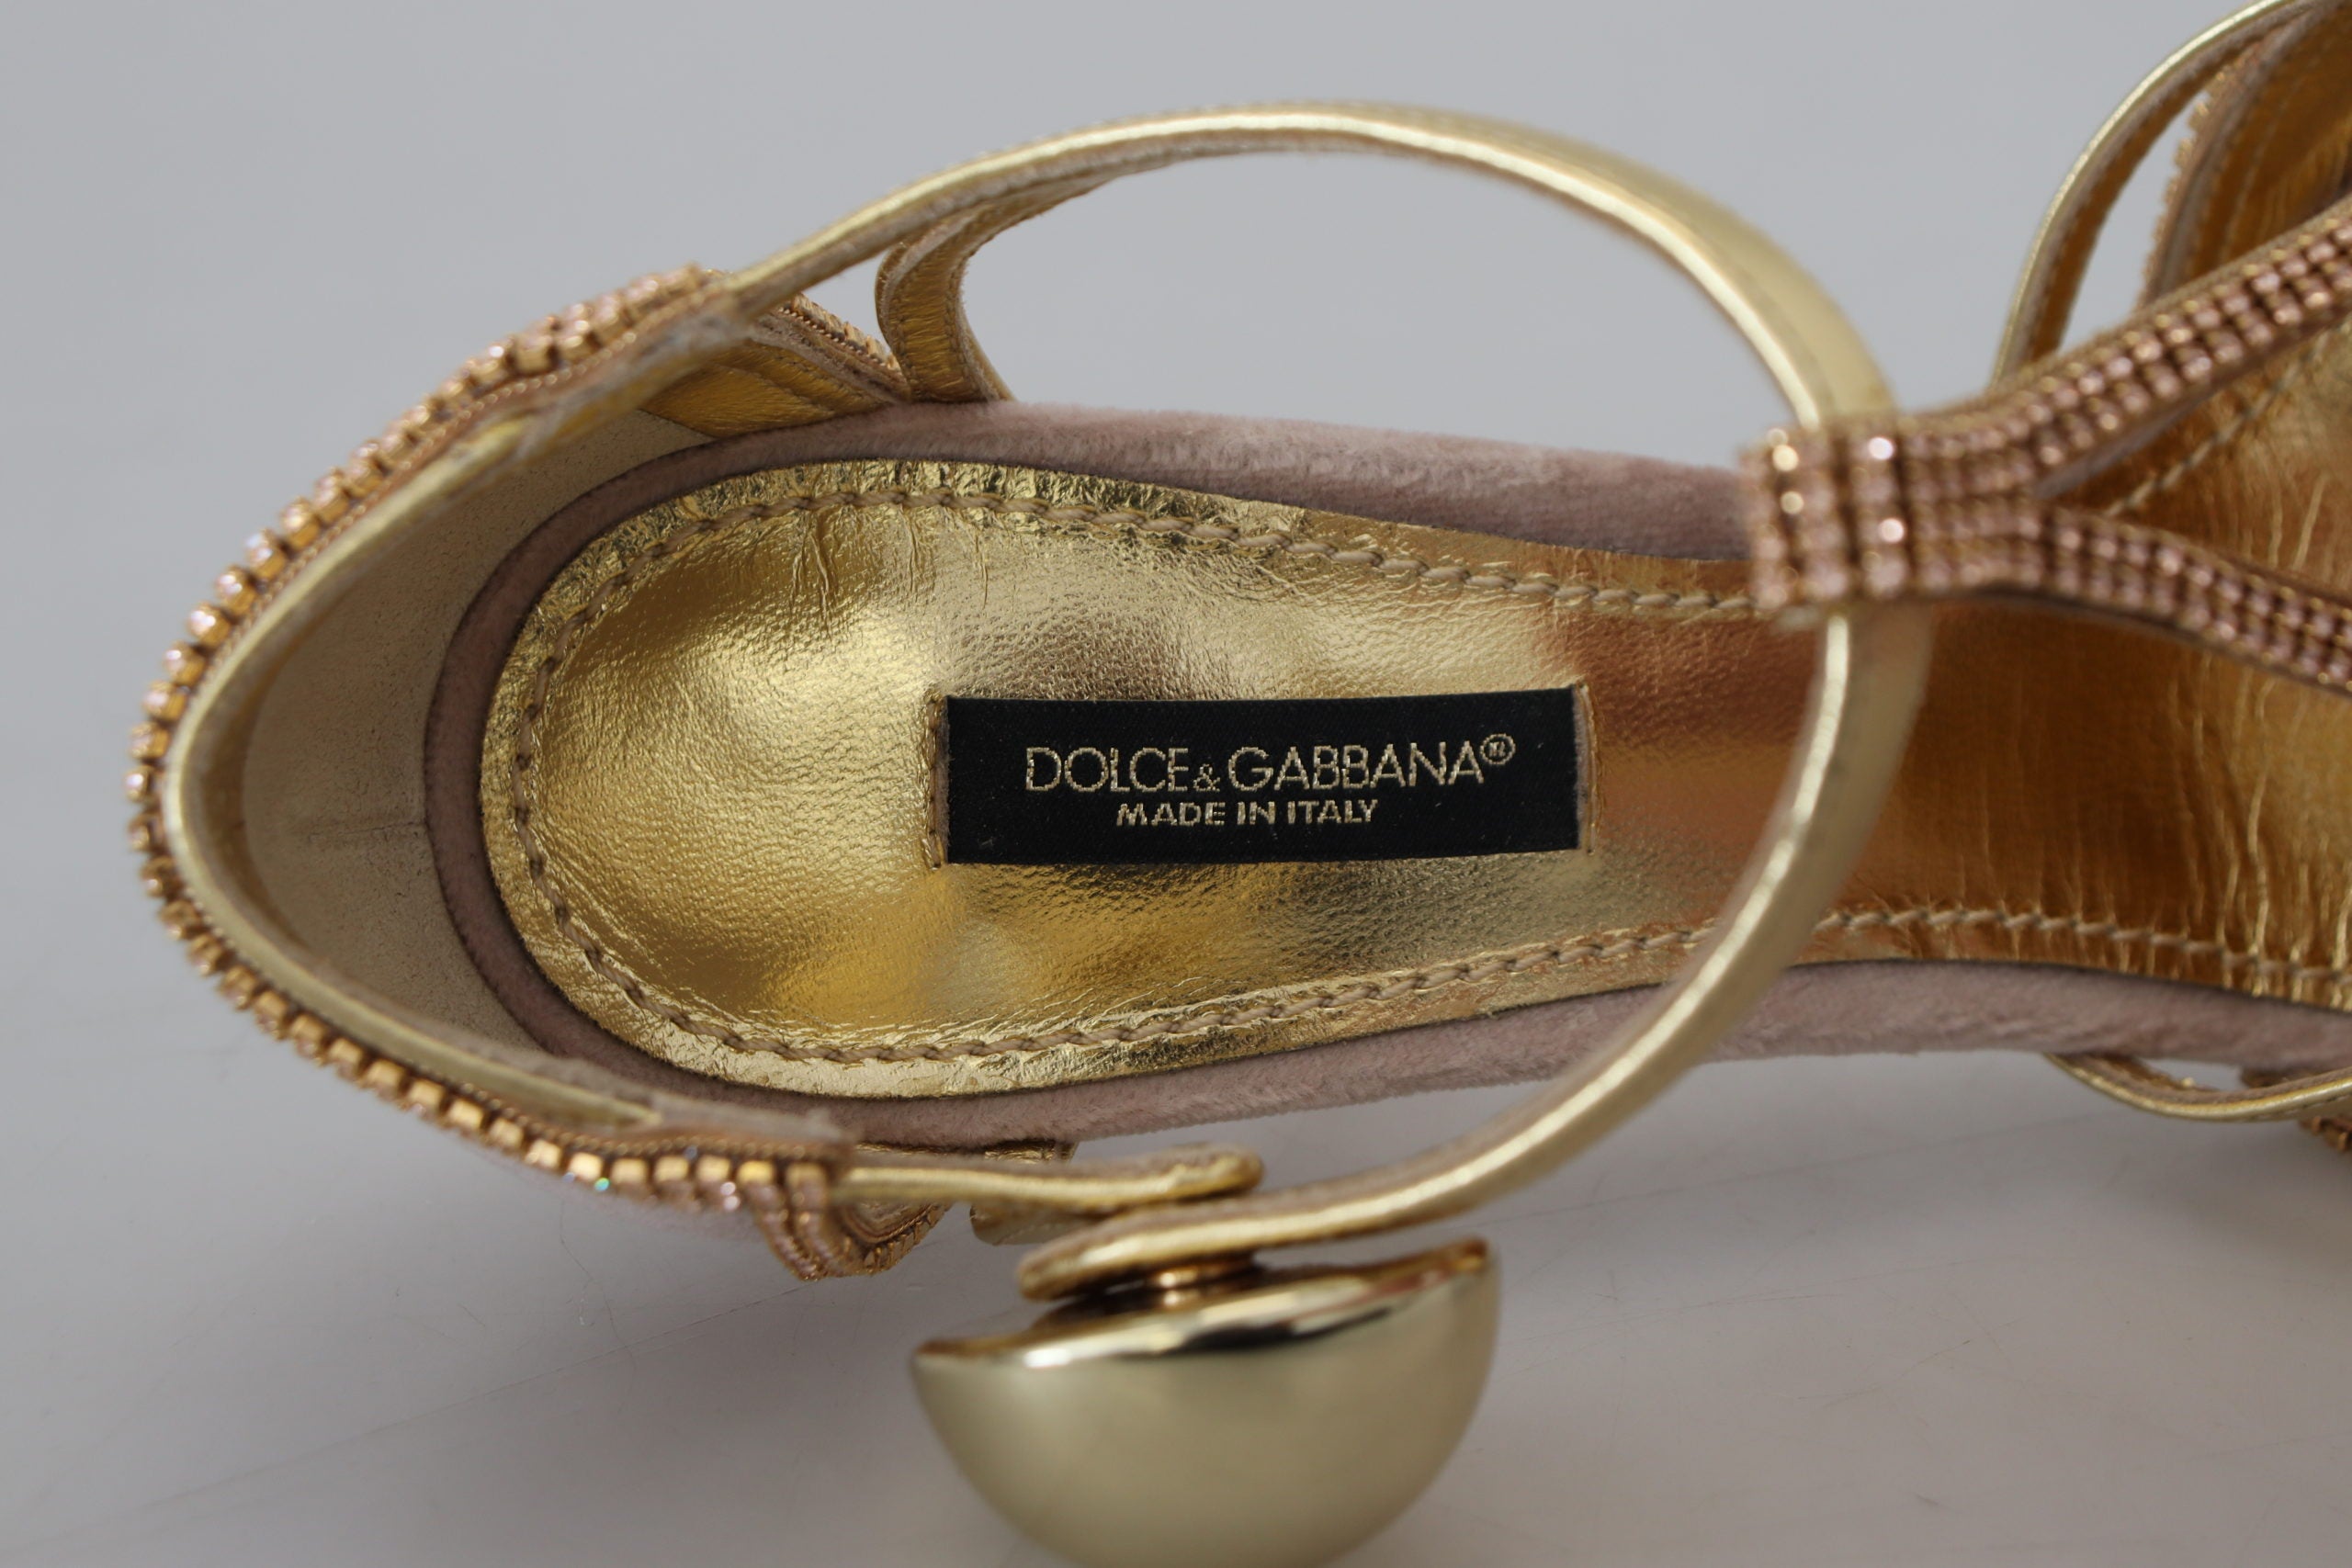 Dolce & Gabbana Elegant Pink Crystal Pumps with High Heels